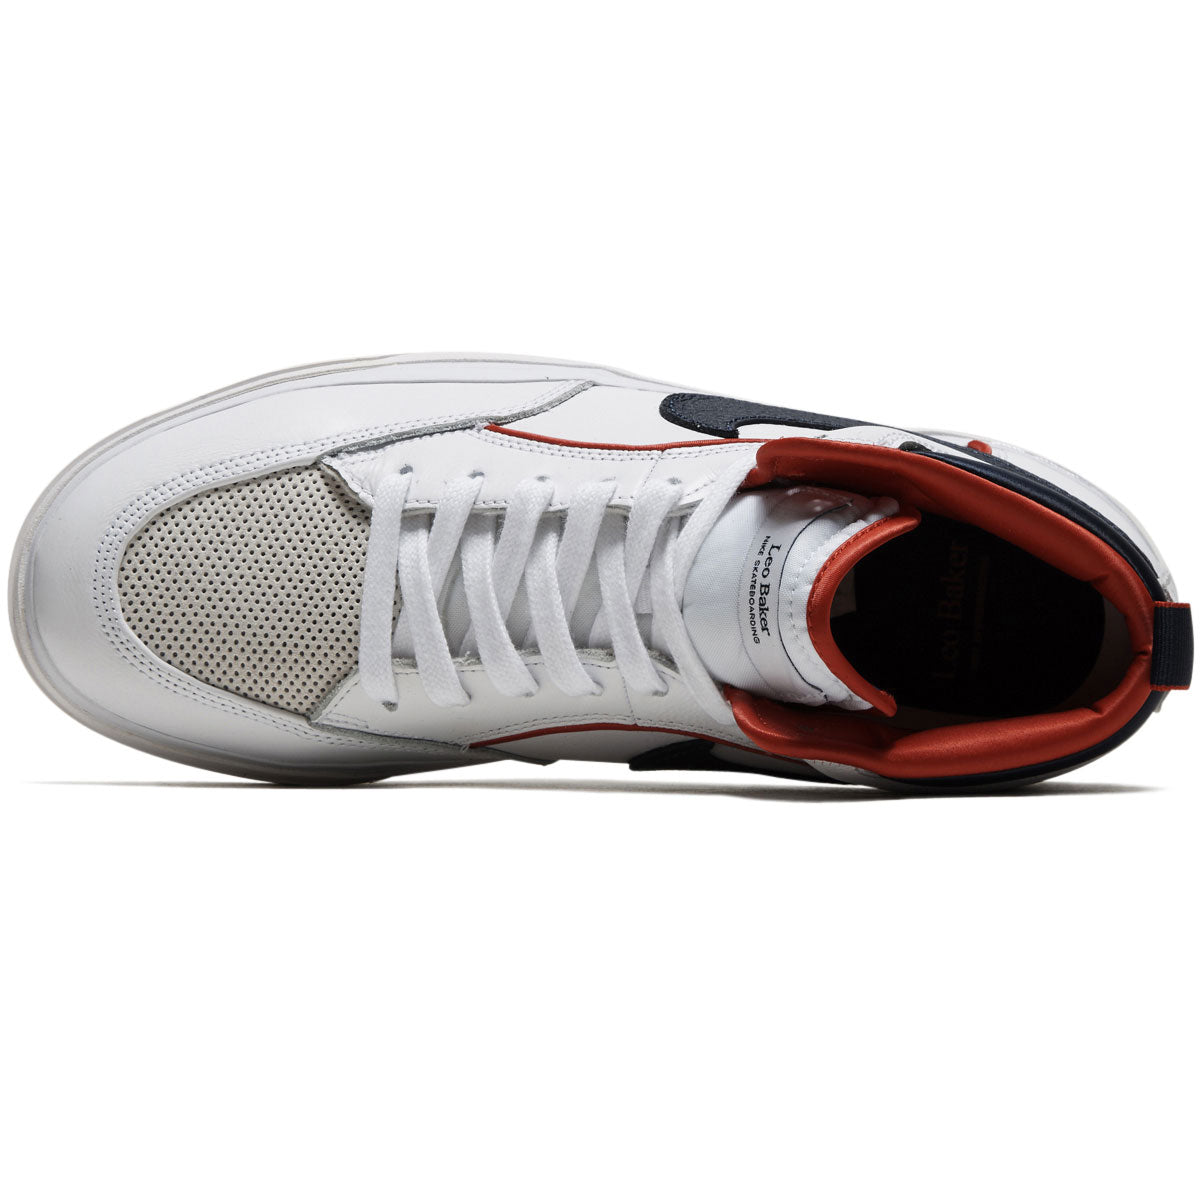 Nike SB React Leo Premium Shoes - White/Midnight Navy/University Red/White image 3